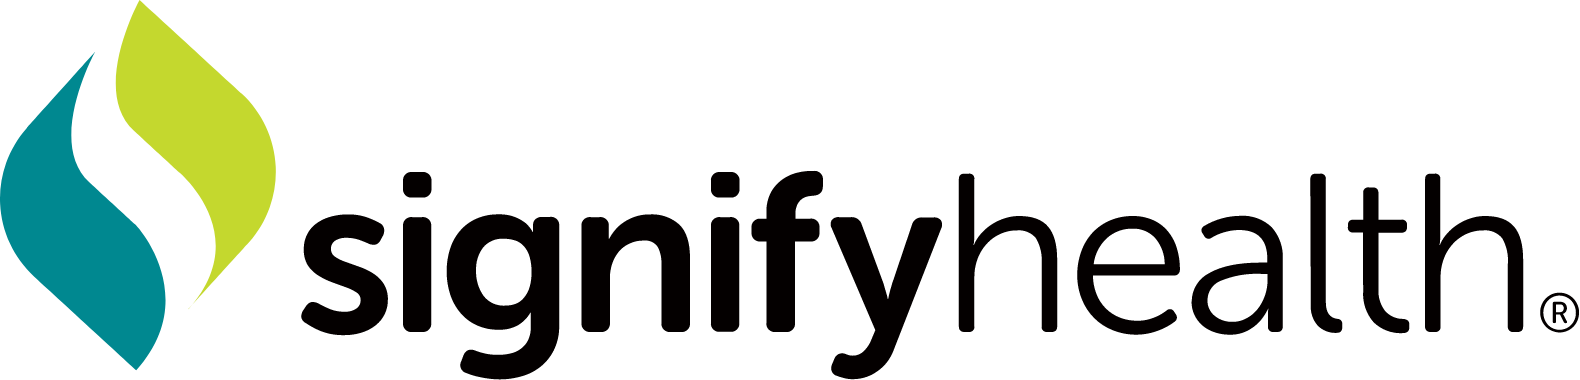 Signify Health logo large (transparent PNG)